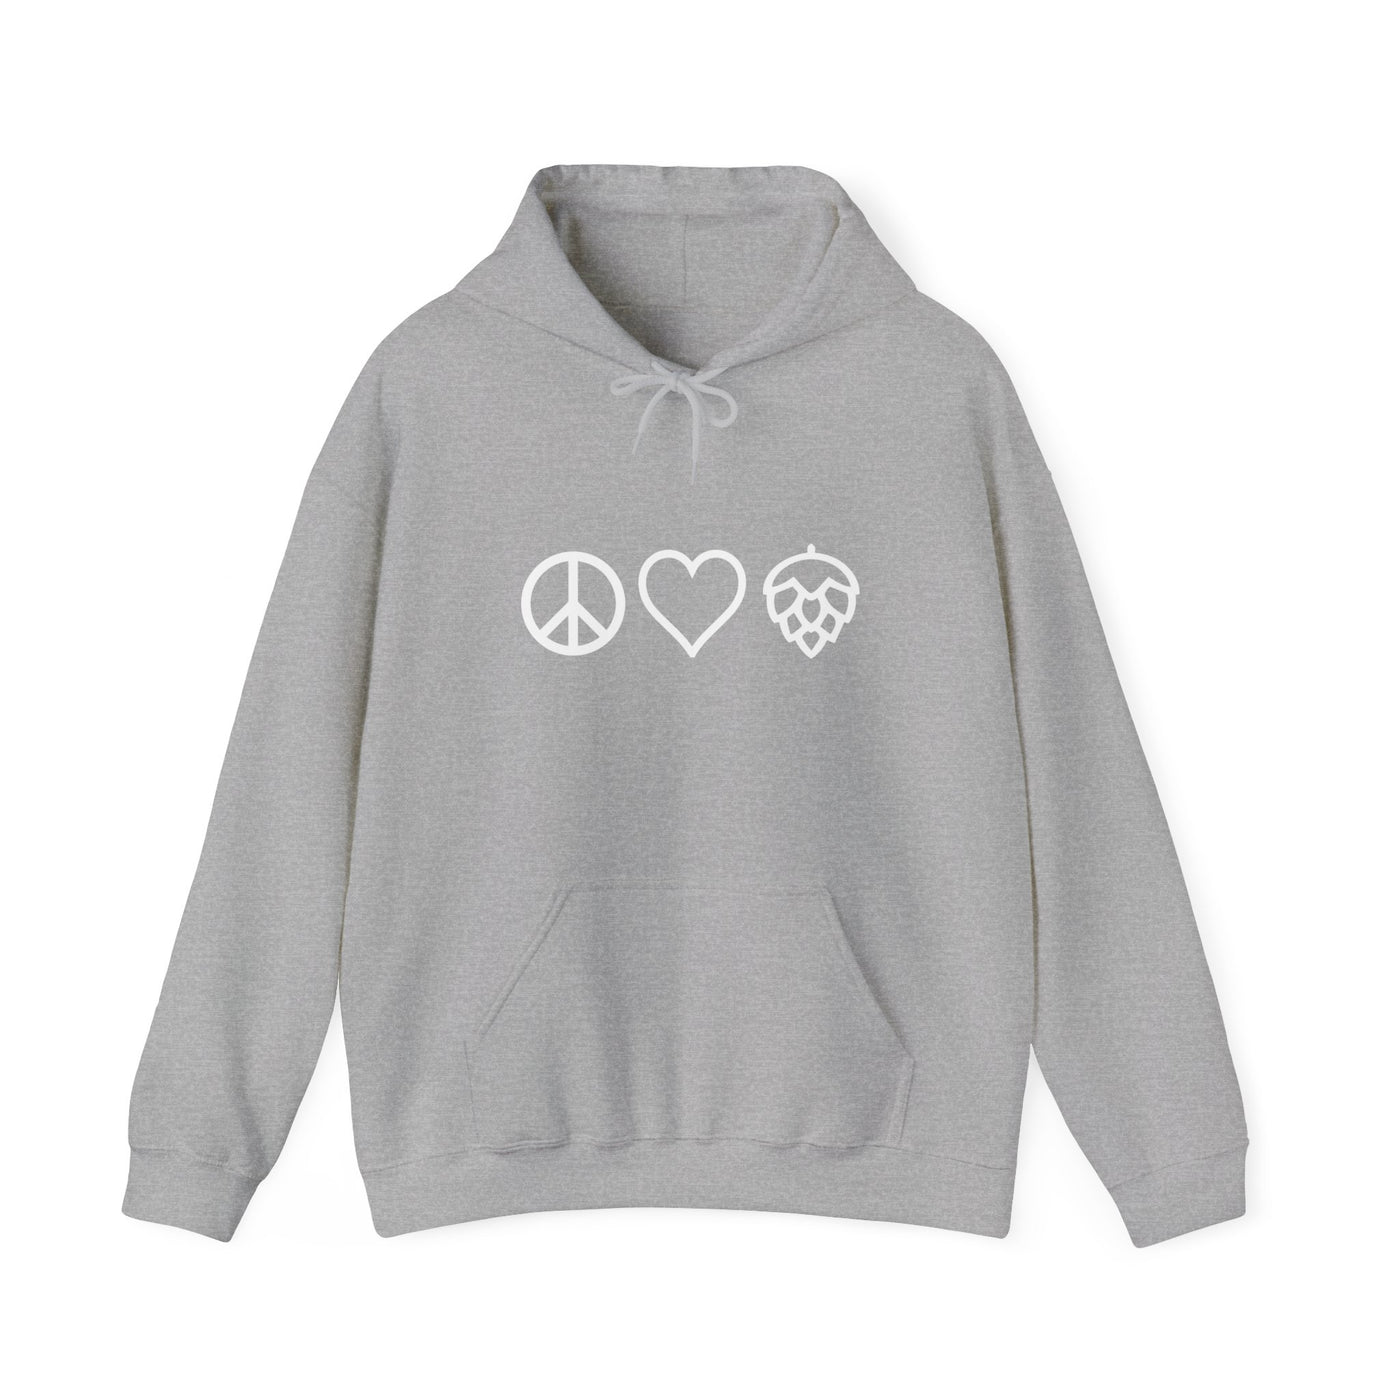 Peace Love And Hops Hooded Sweatshirt